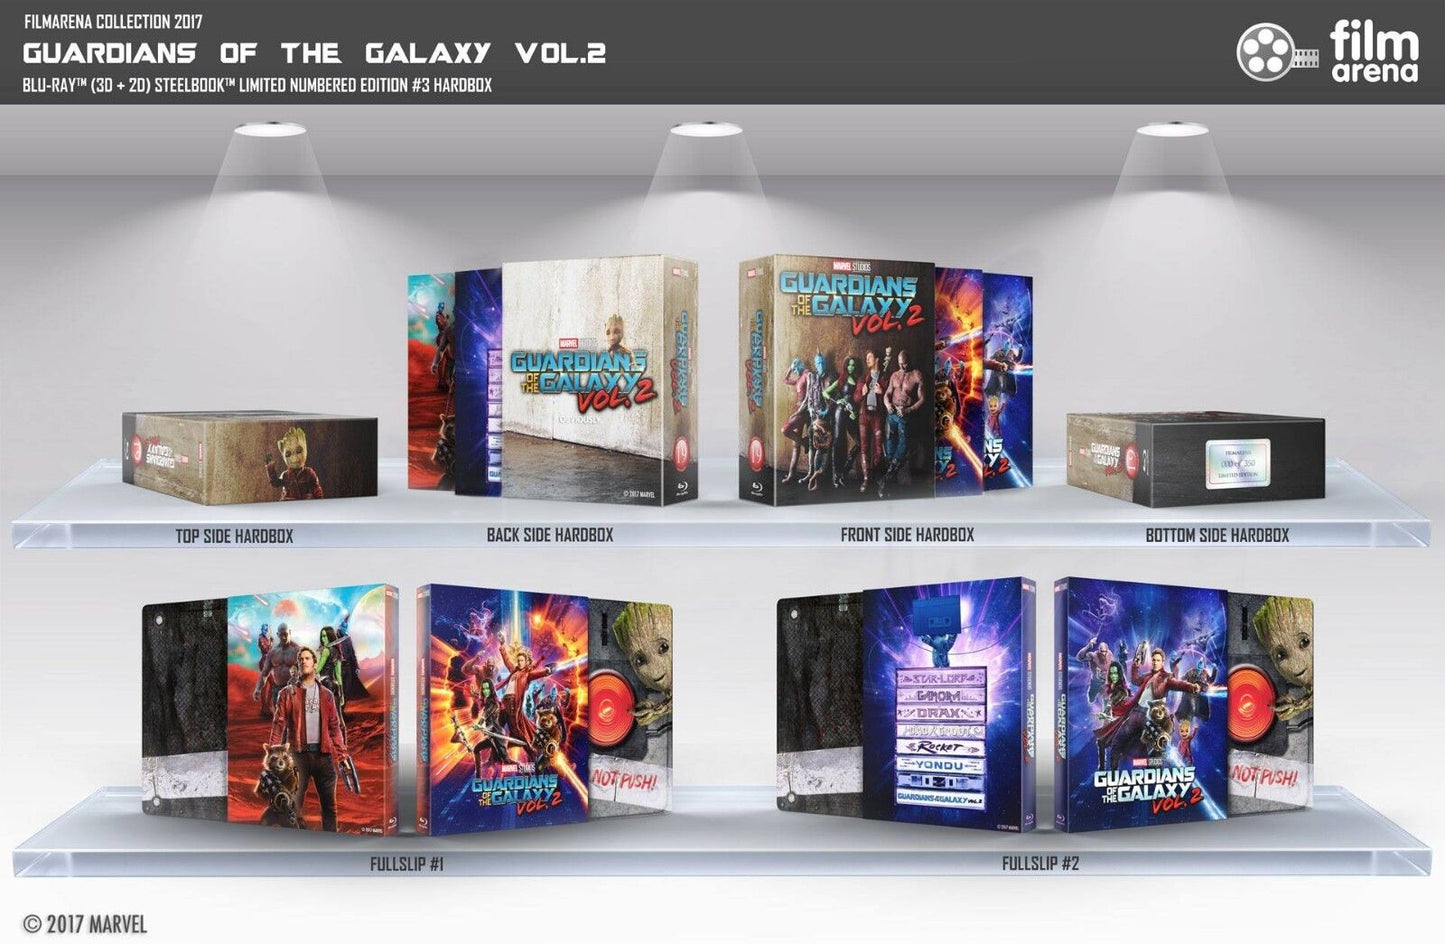 Guardians of the Galaxy Vol. 2 Blu-ray SteelBook Filmarena Collection #92 E3 Hard Box Set